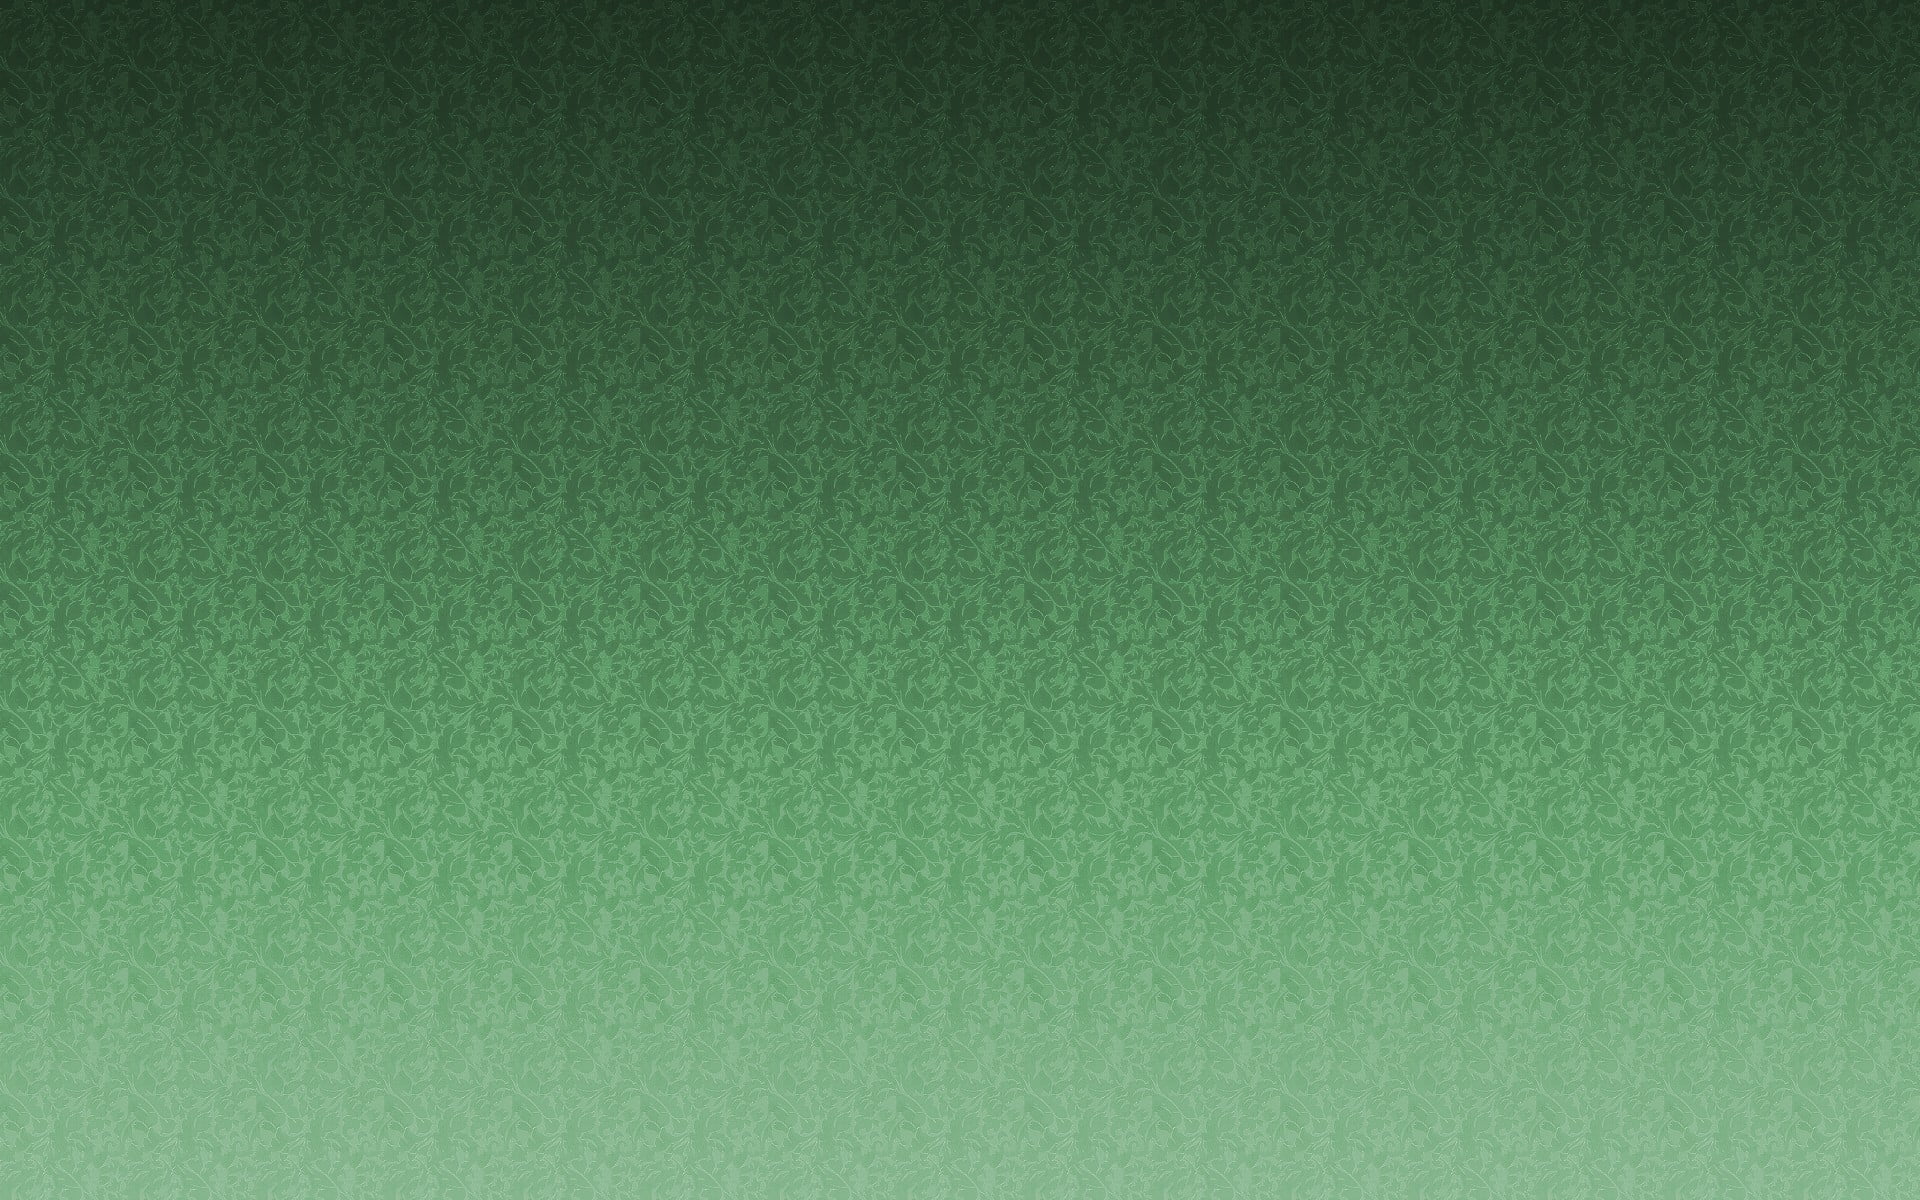 green textile, pattern, green background, textured, texture